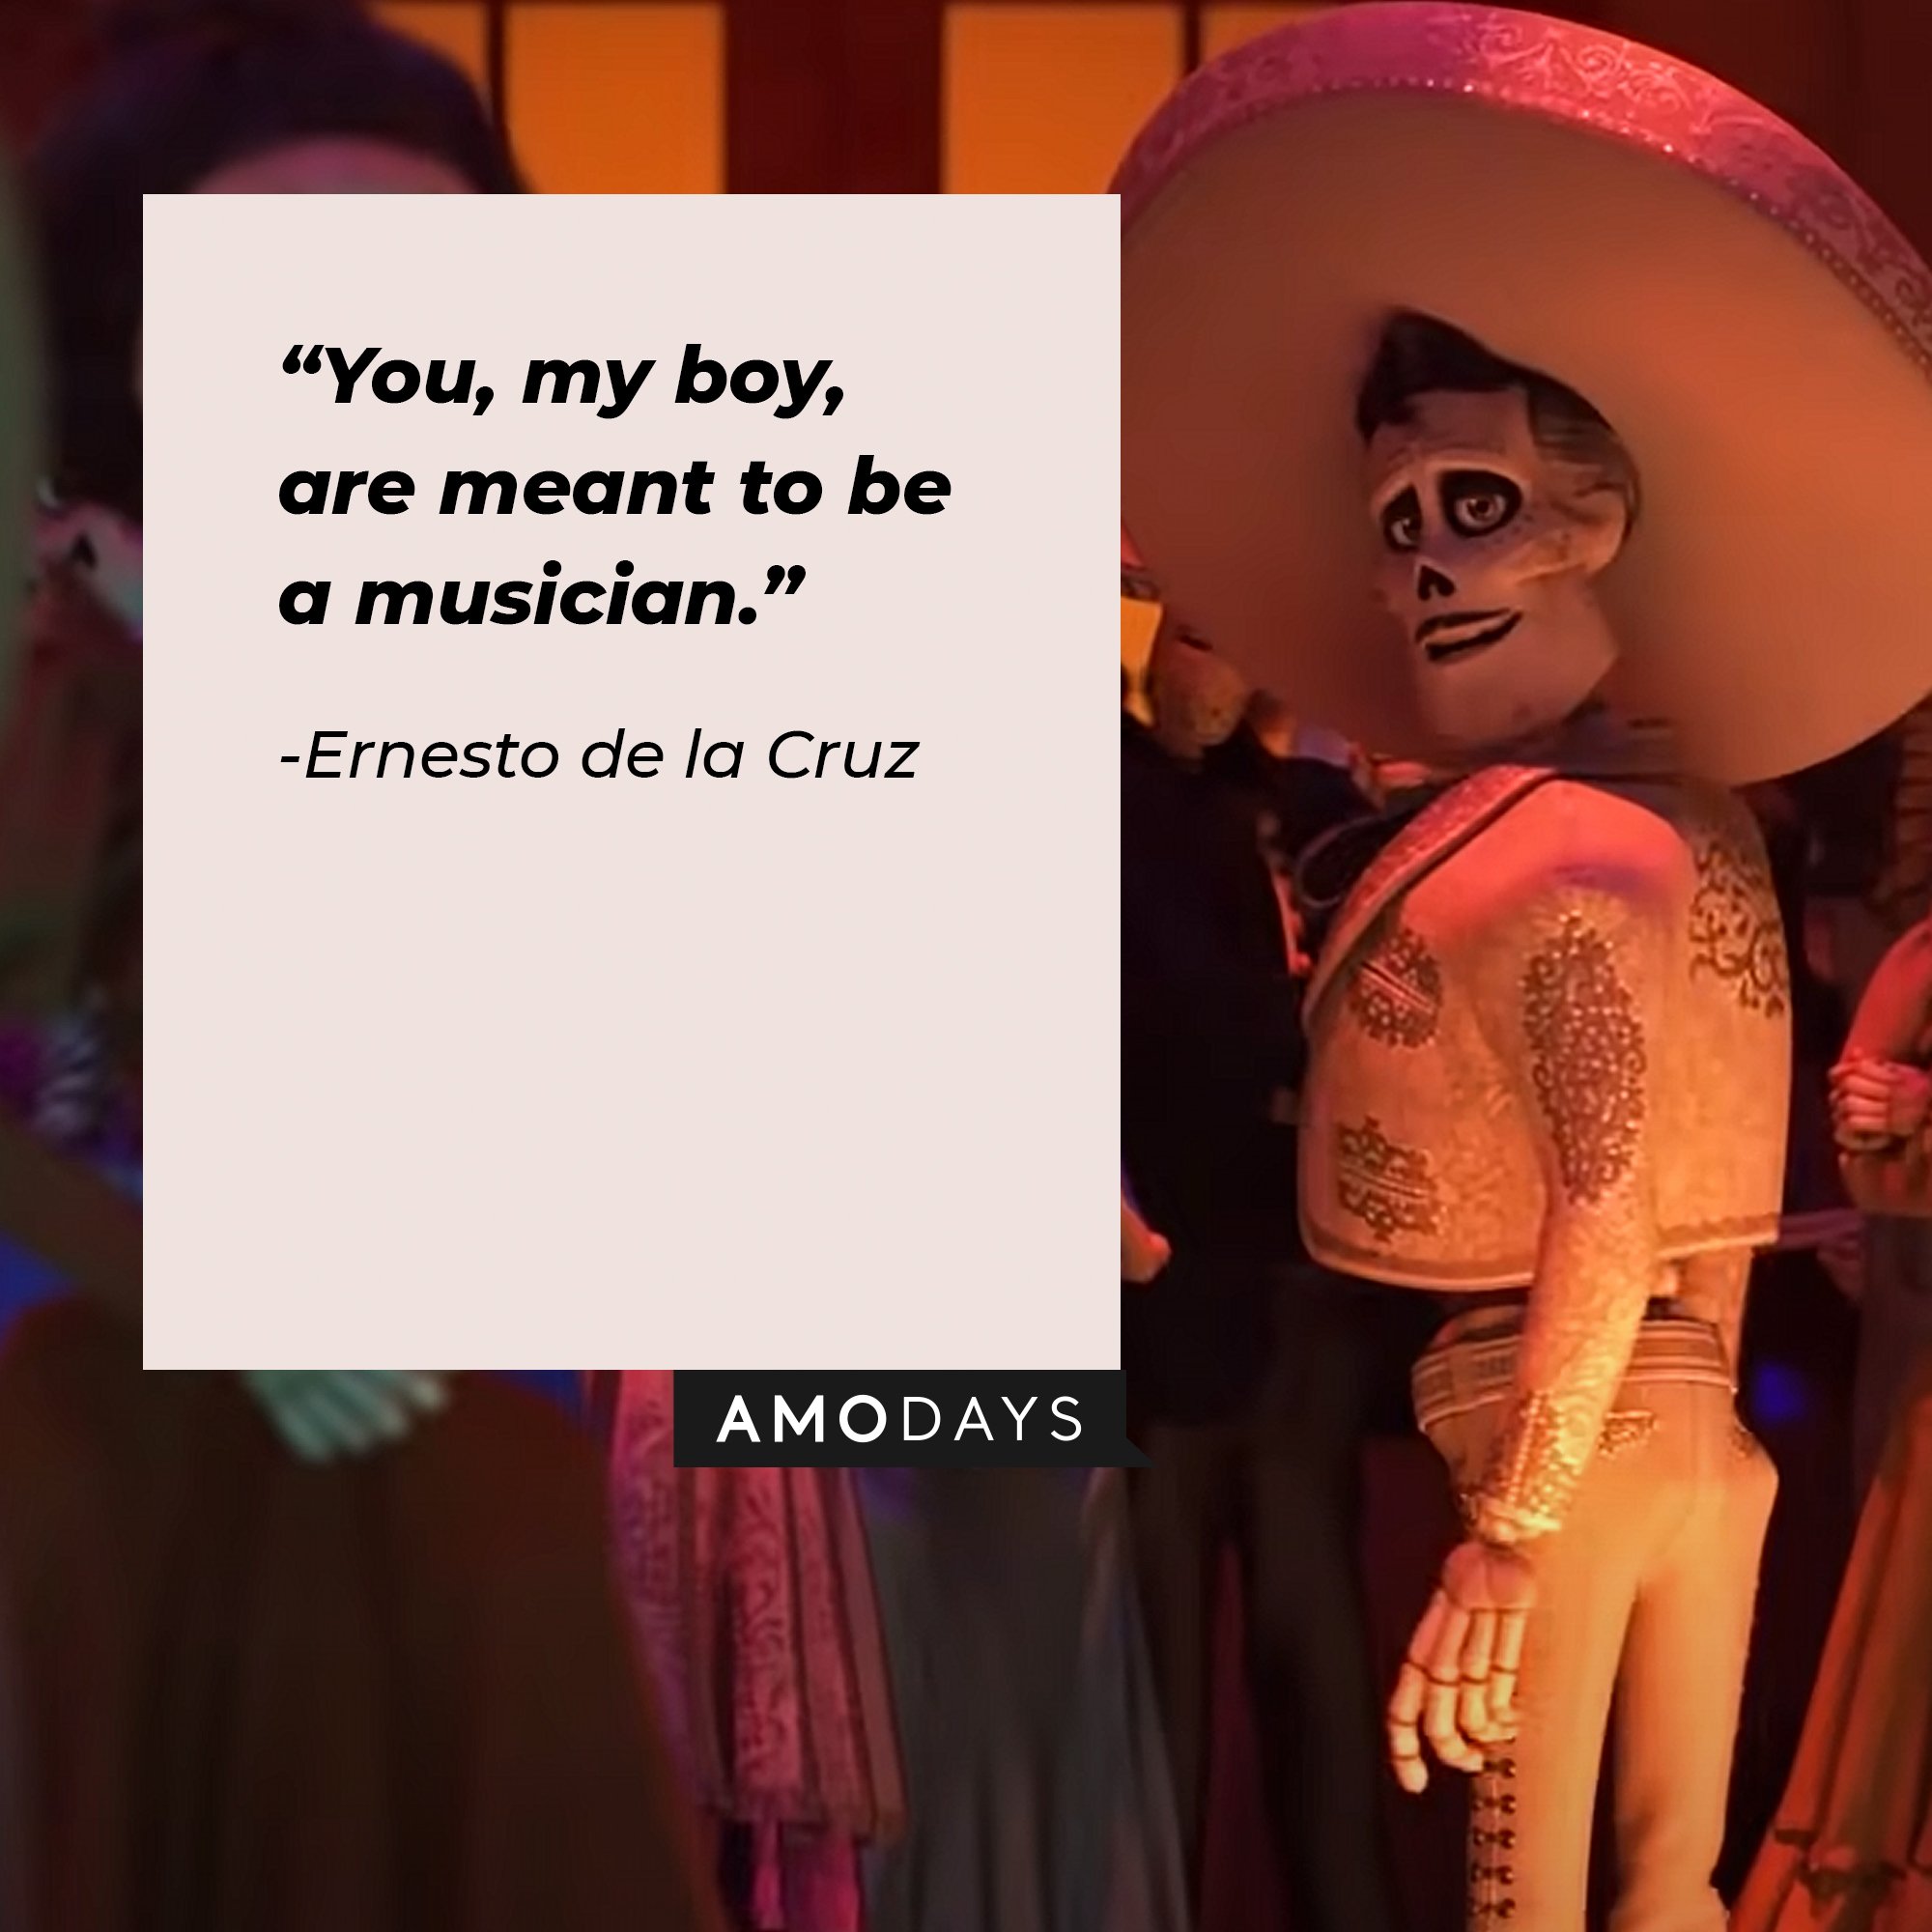 Ernesto de la Cruz's quote: “You, my boy, are meant to be a musician.” | Image: AmoDays